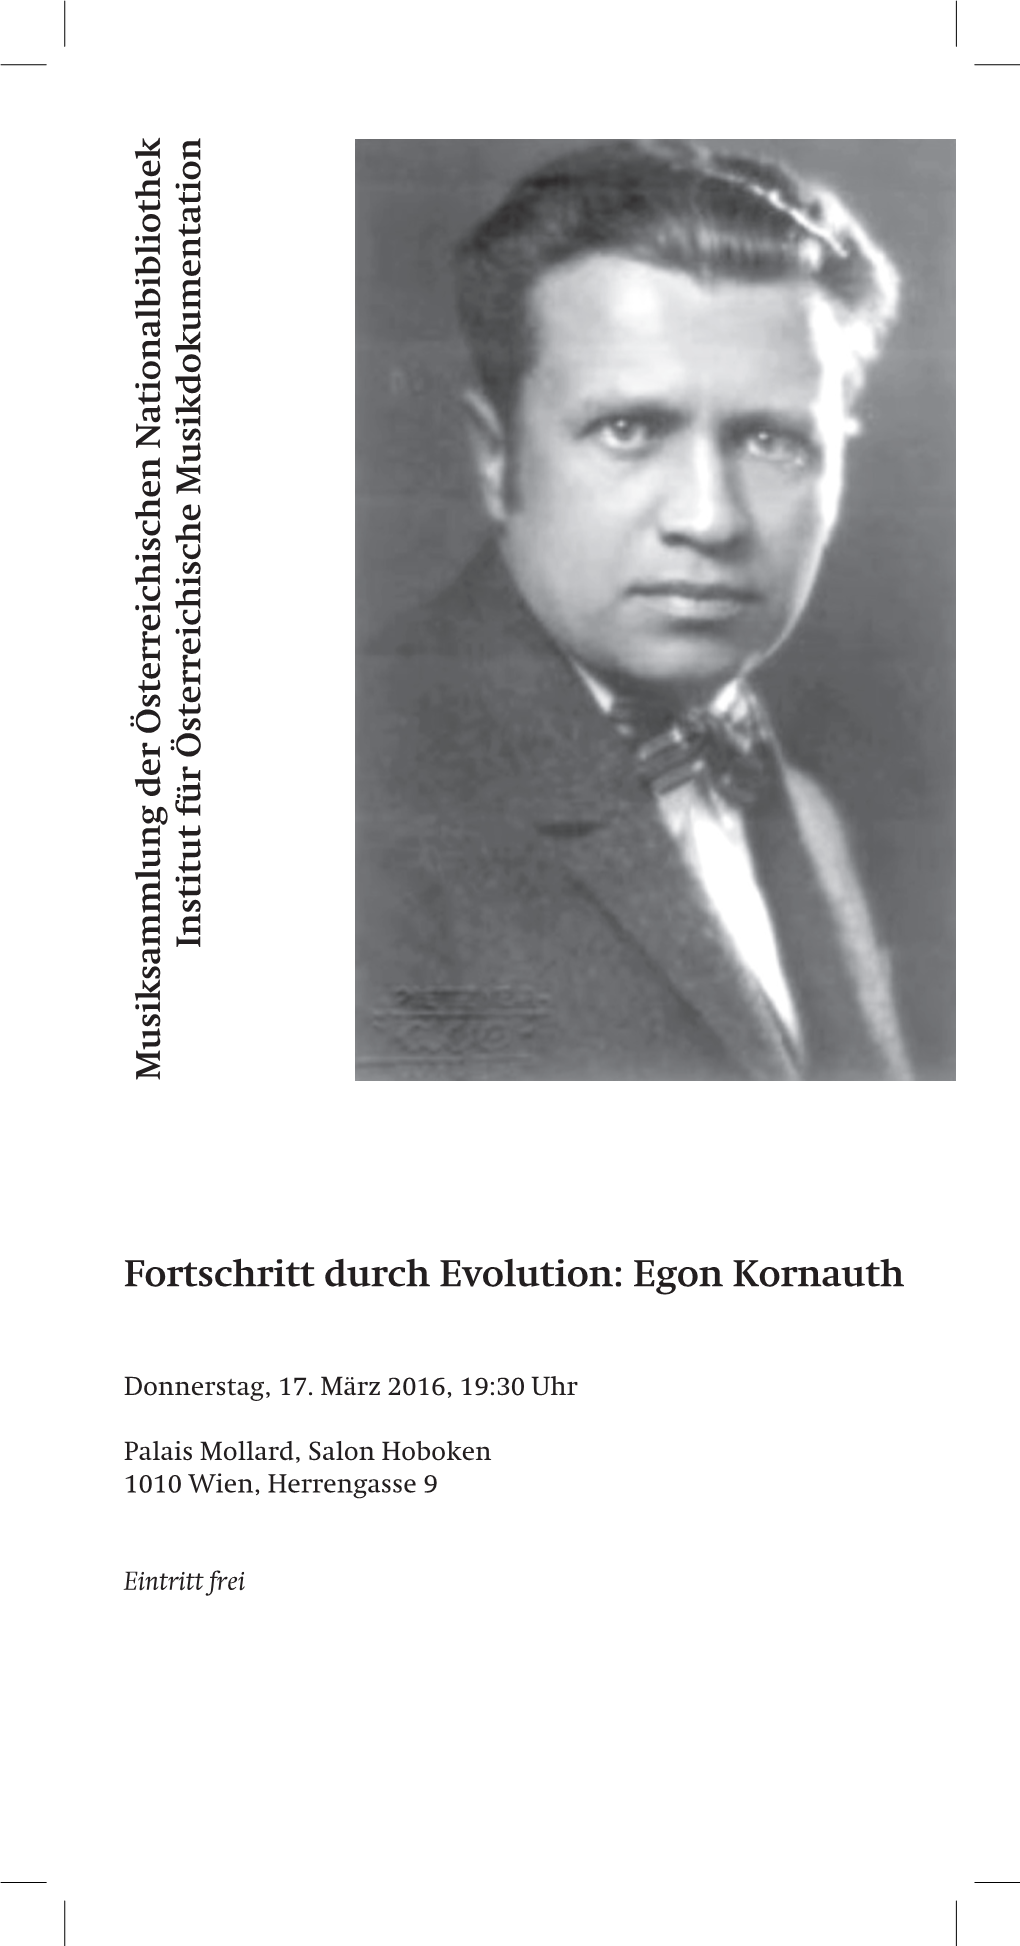 Egon Kornauth